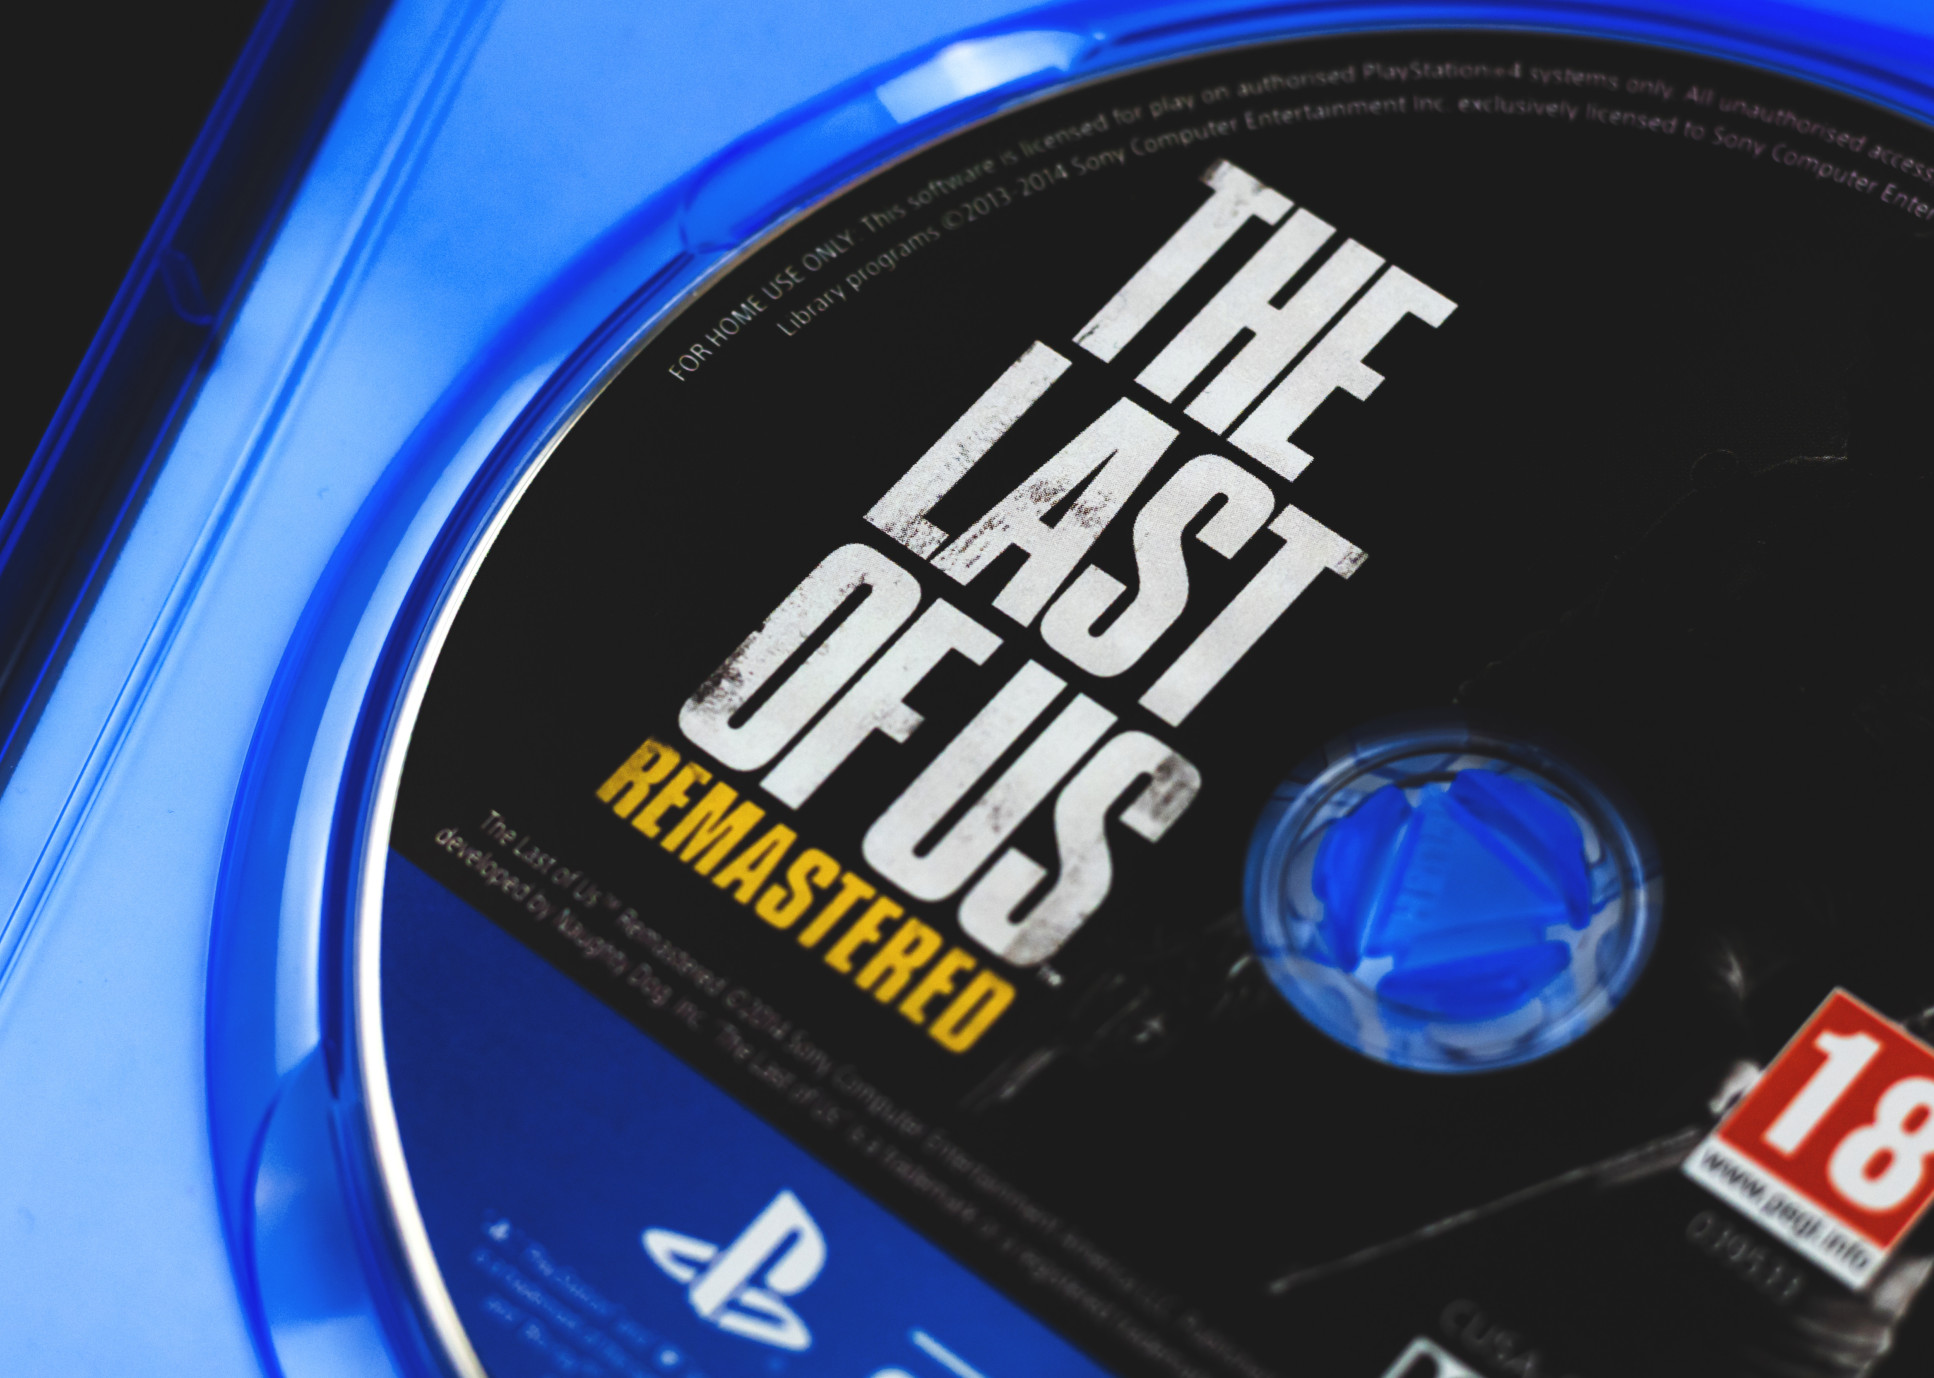 The Last of Us video game (Credit: Shutterstock / FellowNeko)